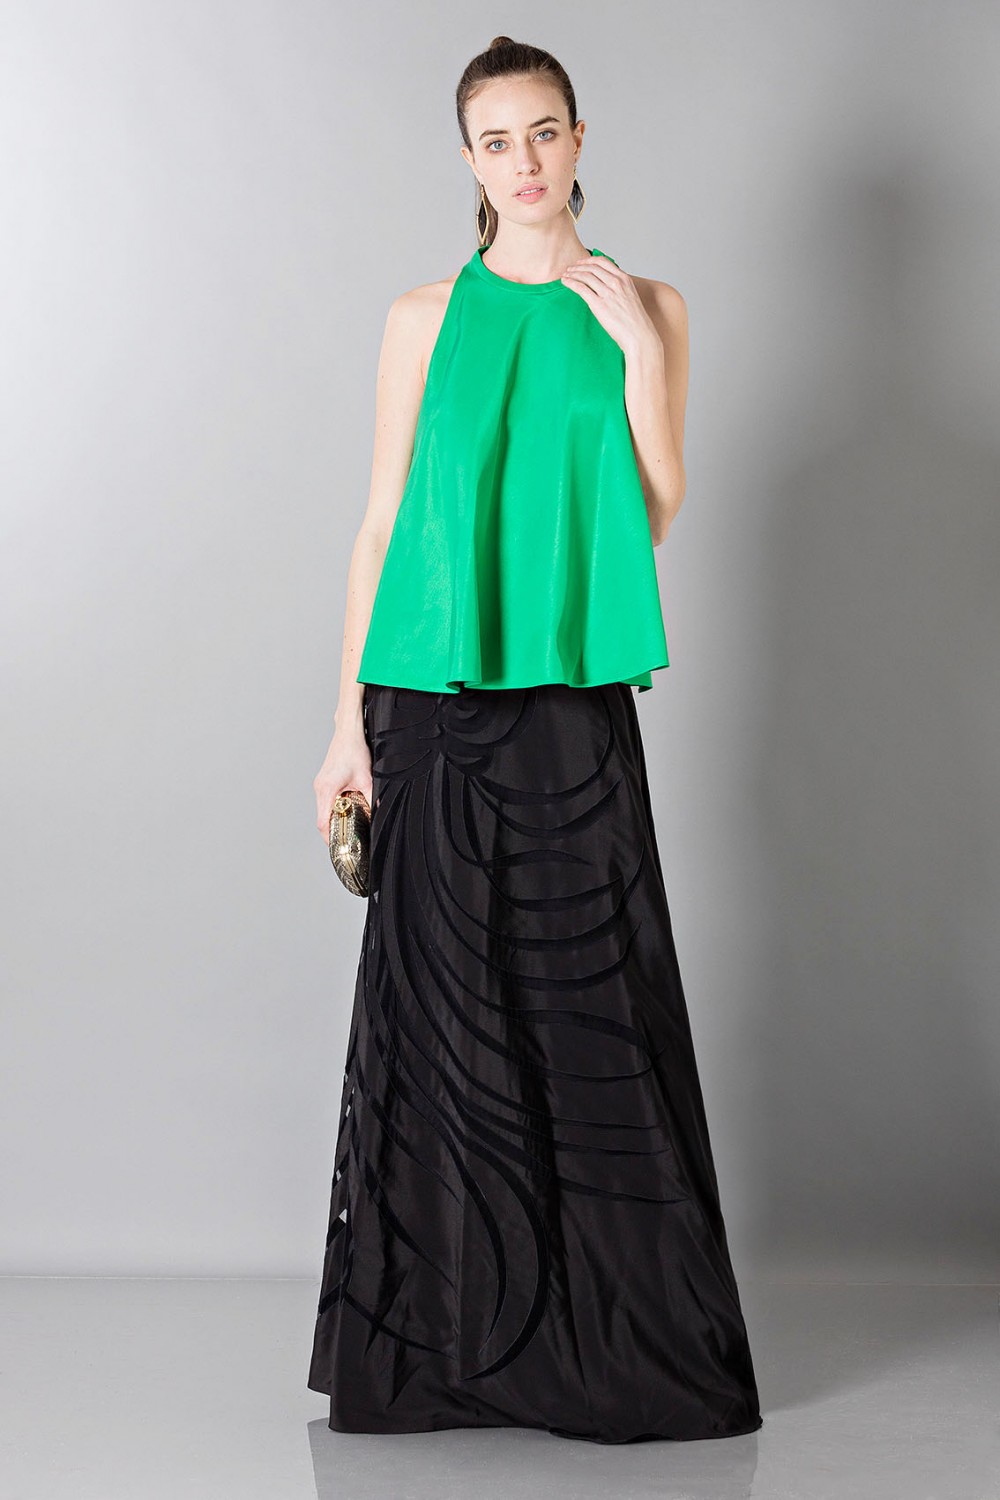 Noleggio Abbigliamento Firmato - Floor-length silk skirt with pattern in contrast - Vionnet - Drexcode -1